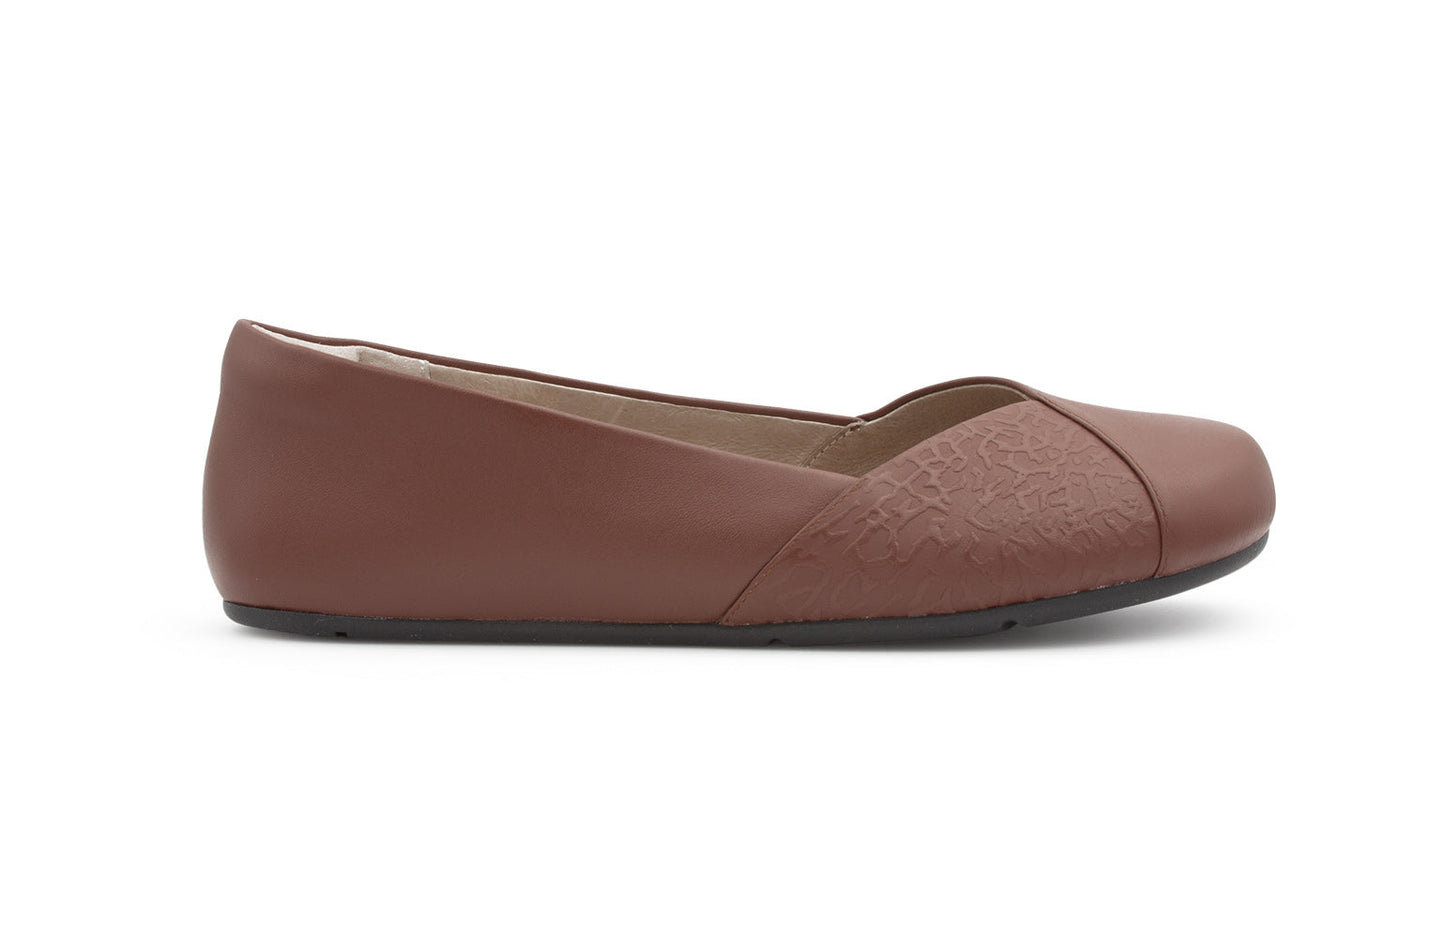 Xero Shoes Phoenix Leather barfods ballerinaer til kvinder i farven brown, yderside